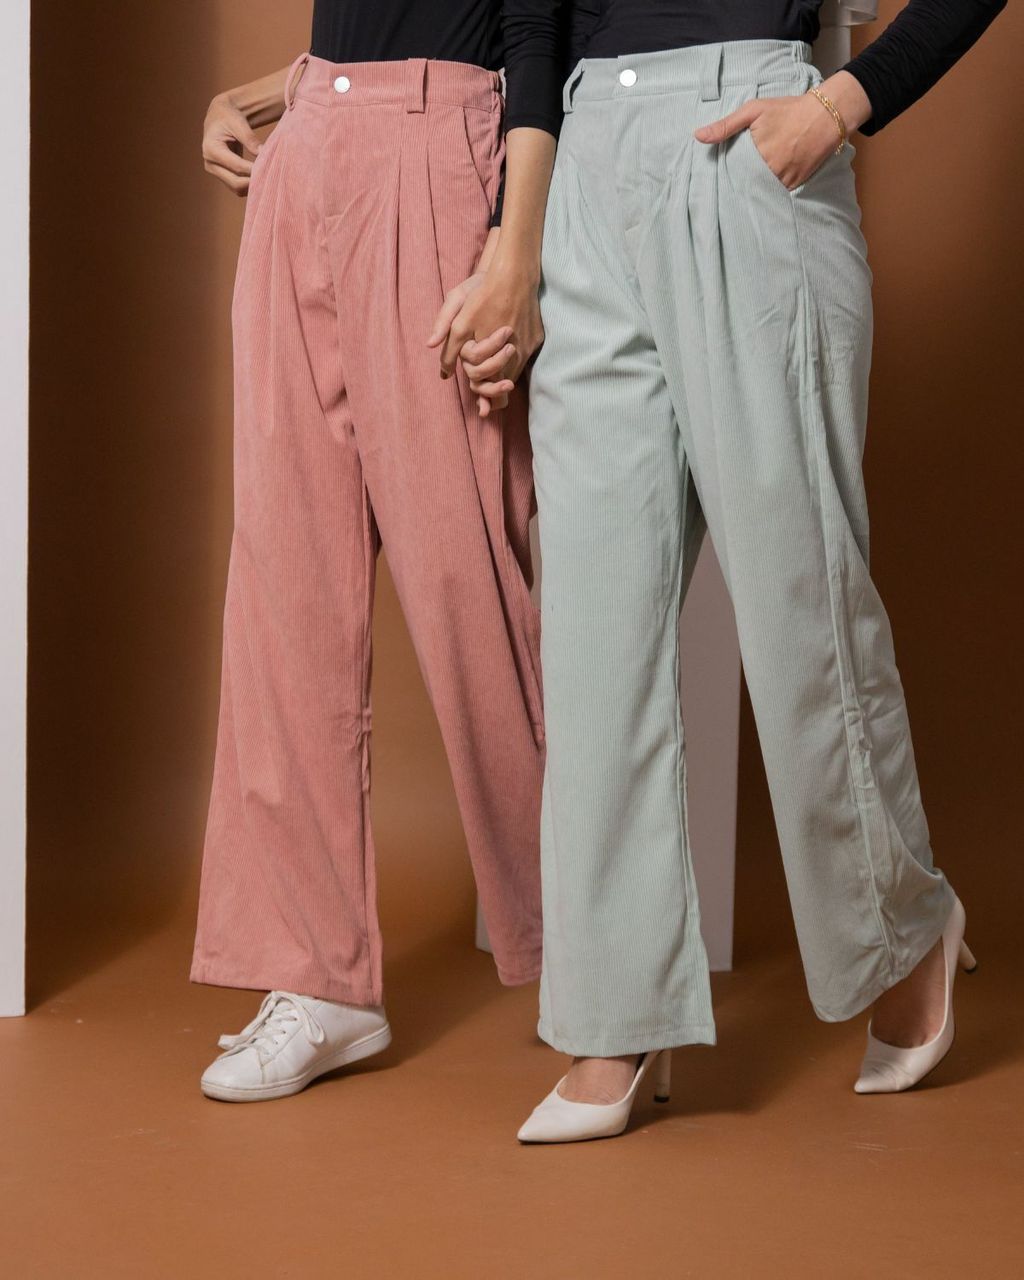 haura-wear-leona-corduroy-high-waist-cotton-long-pants-seluar-muslimah-seluar-perempuan-palazzo-pants-sluar (2).jpg